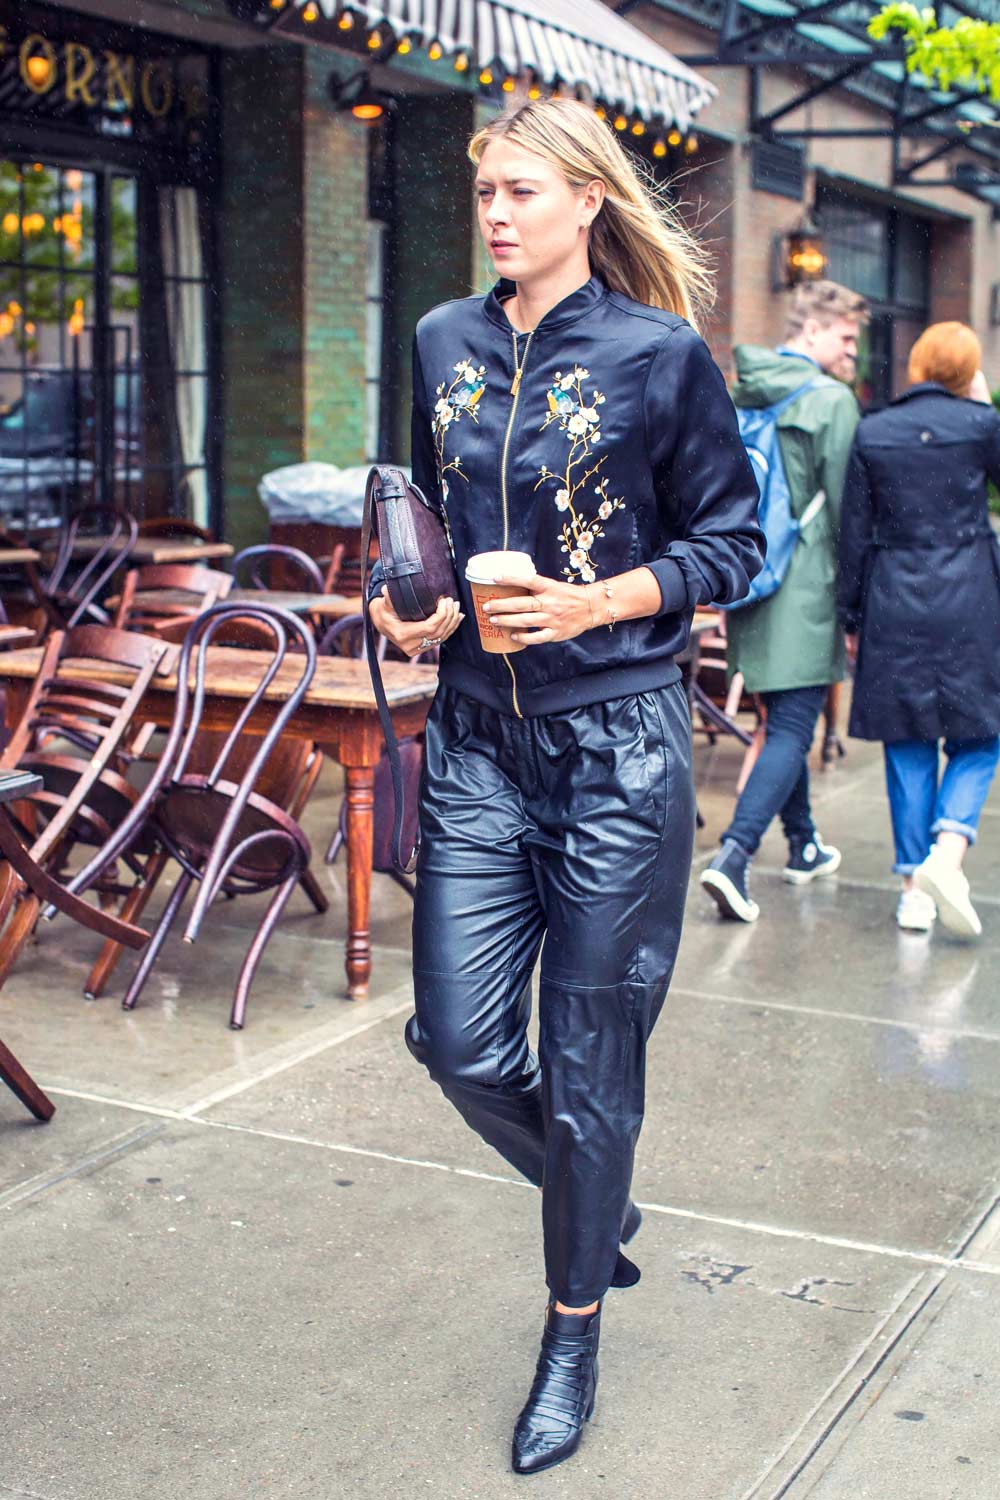 Maria Sharapova leaves Her Hotel in NYC